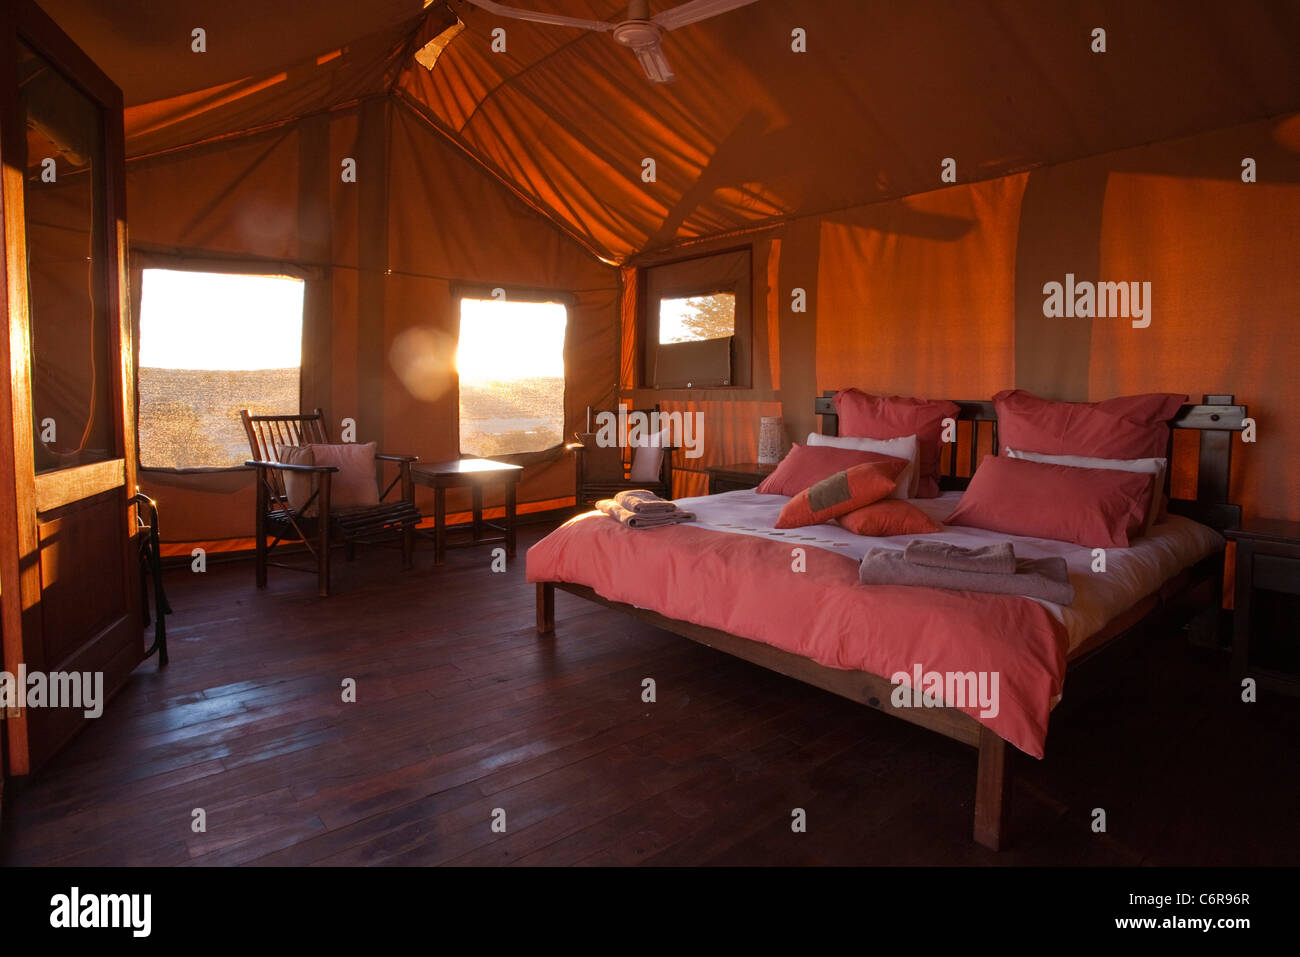 Bedroom interior at the Kalahari tented camp Stock Photo